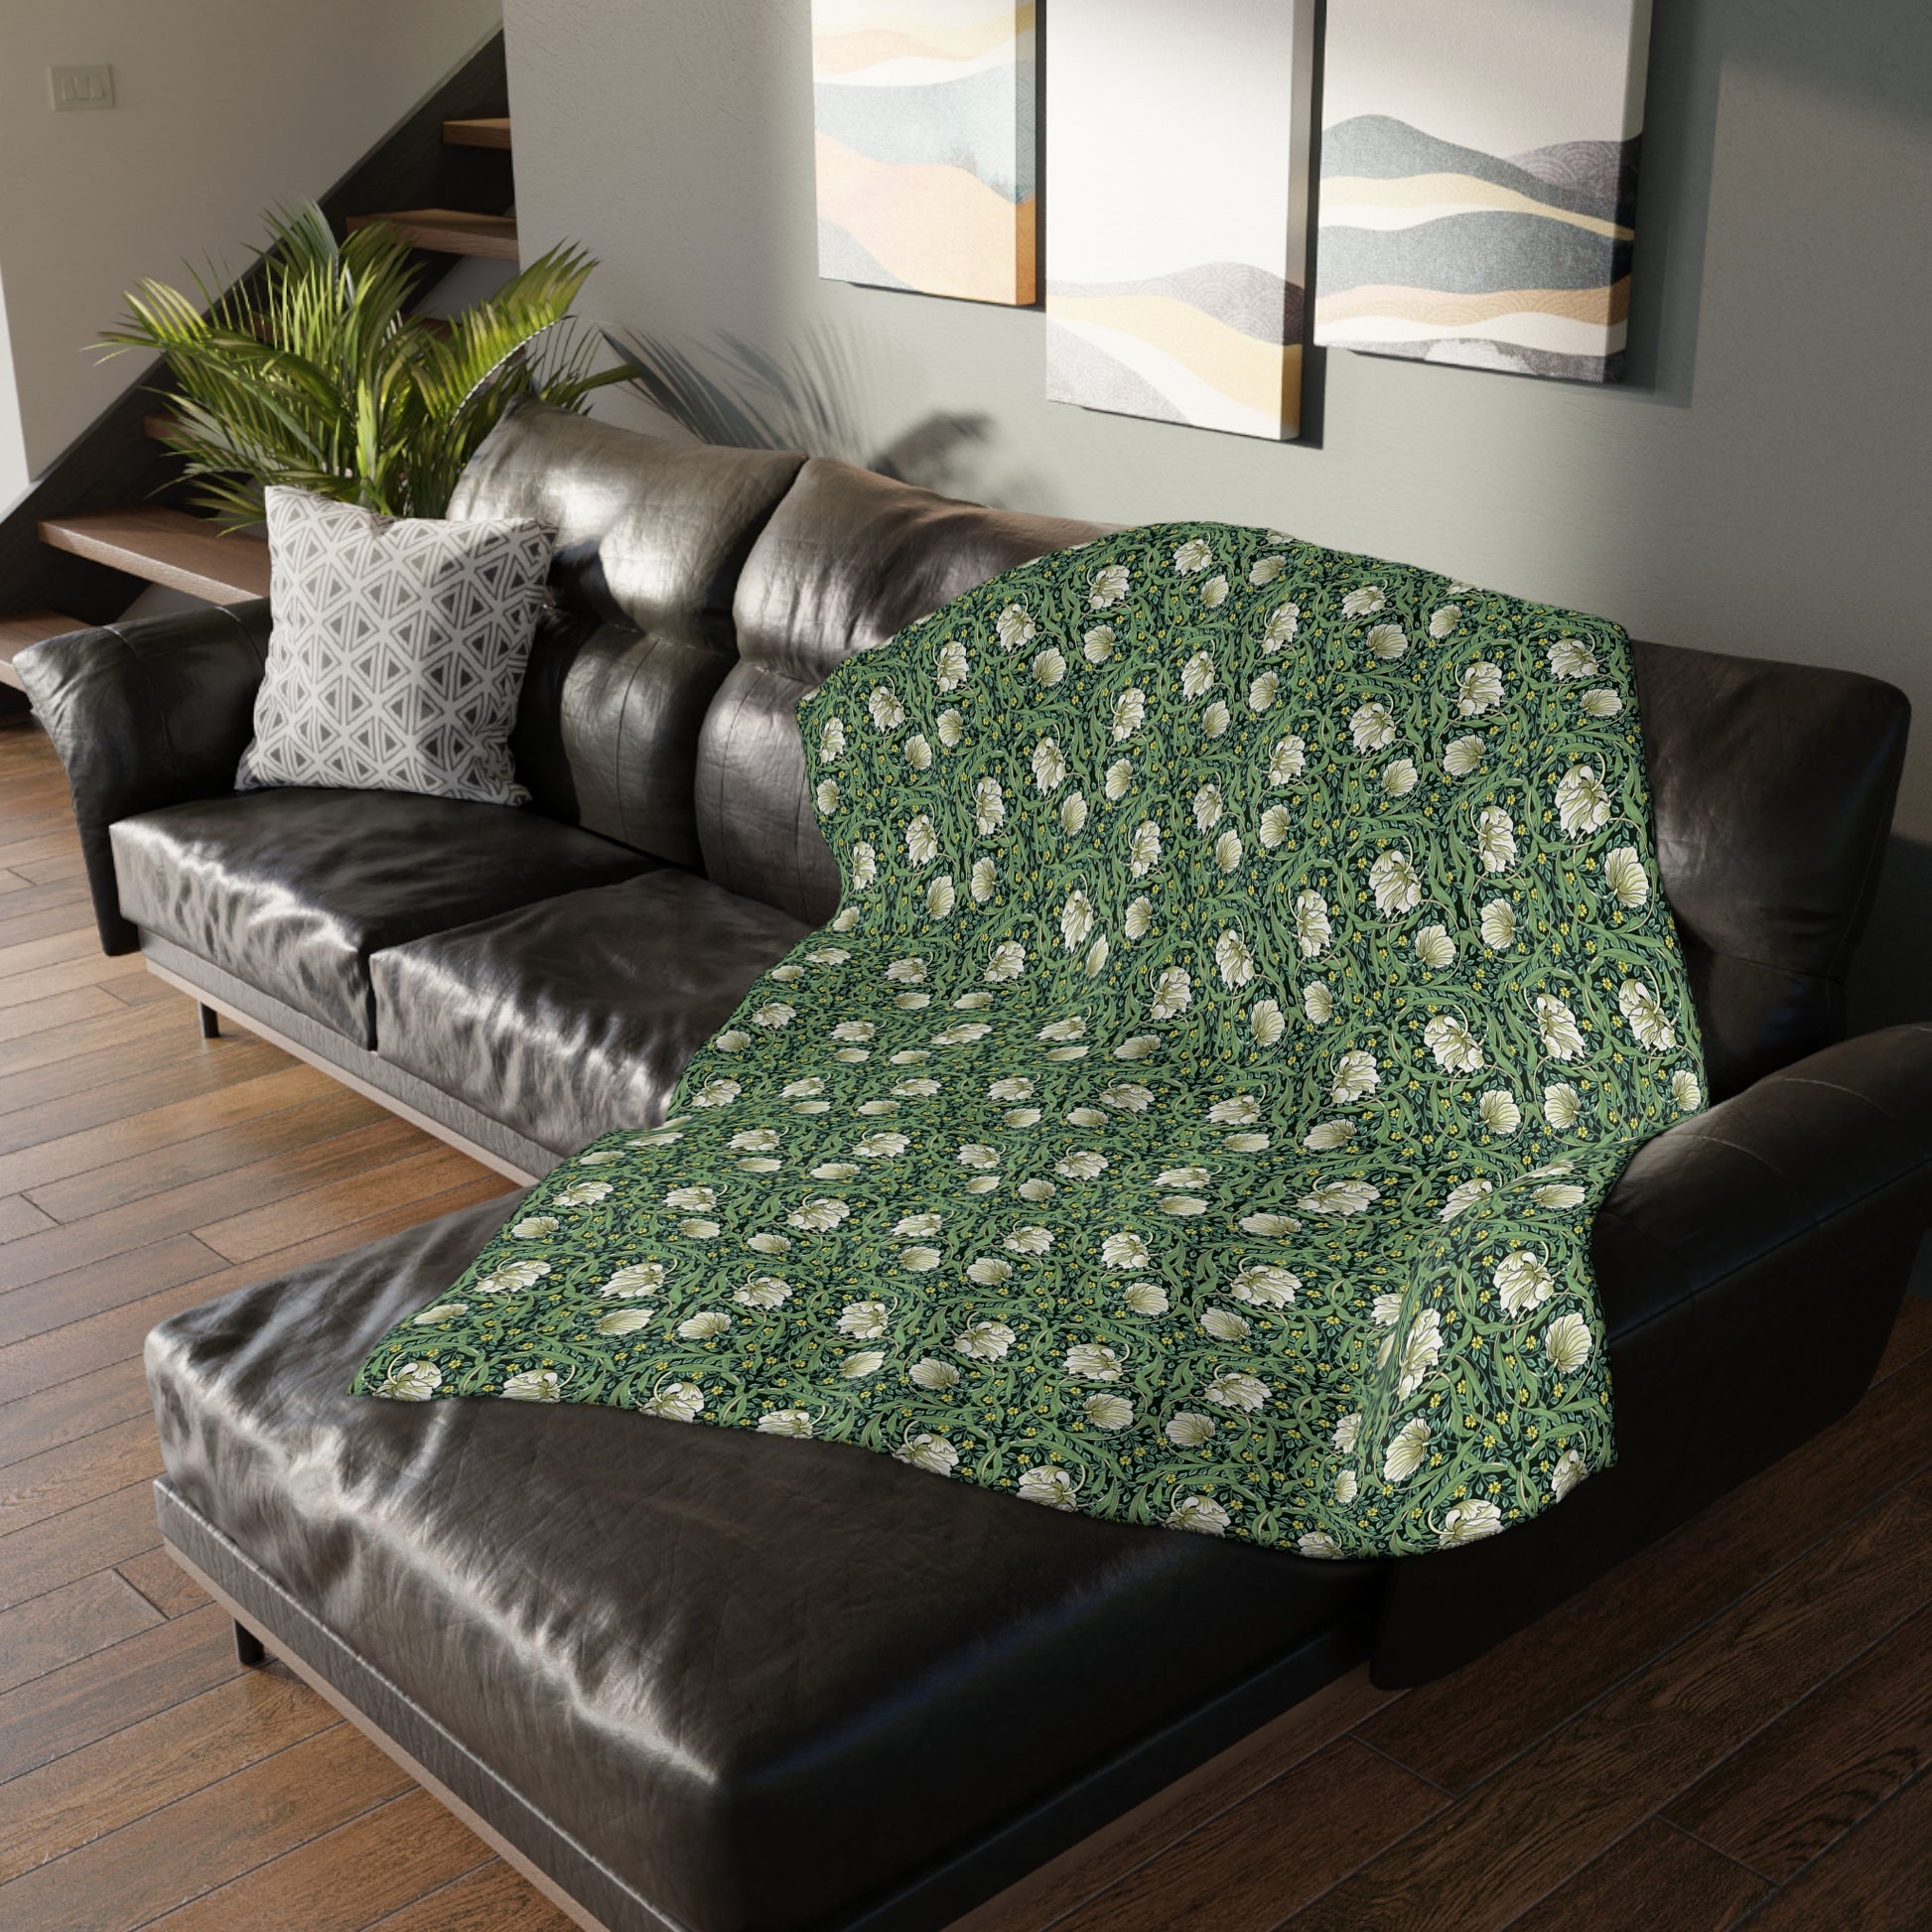 william-morris-co-luxury-velveteen-minky-blanket-two-sided-print-pimpernel-collection-slate-green-7